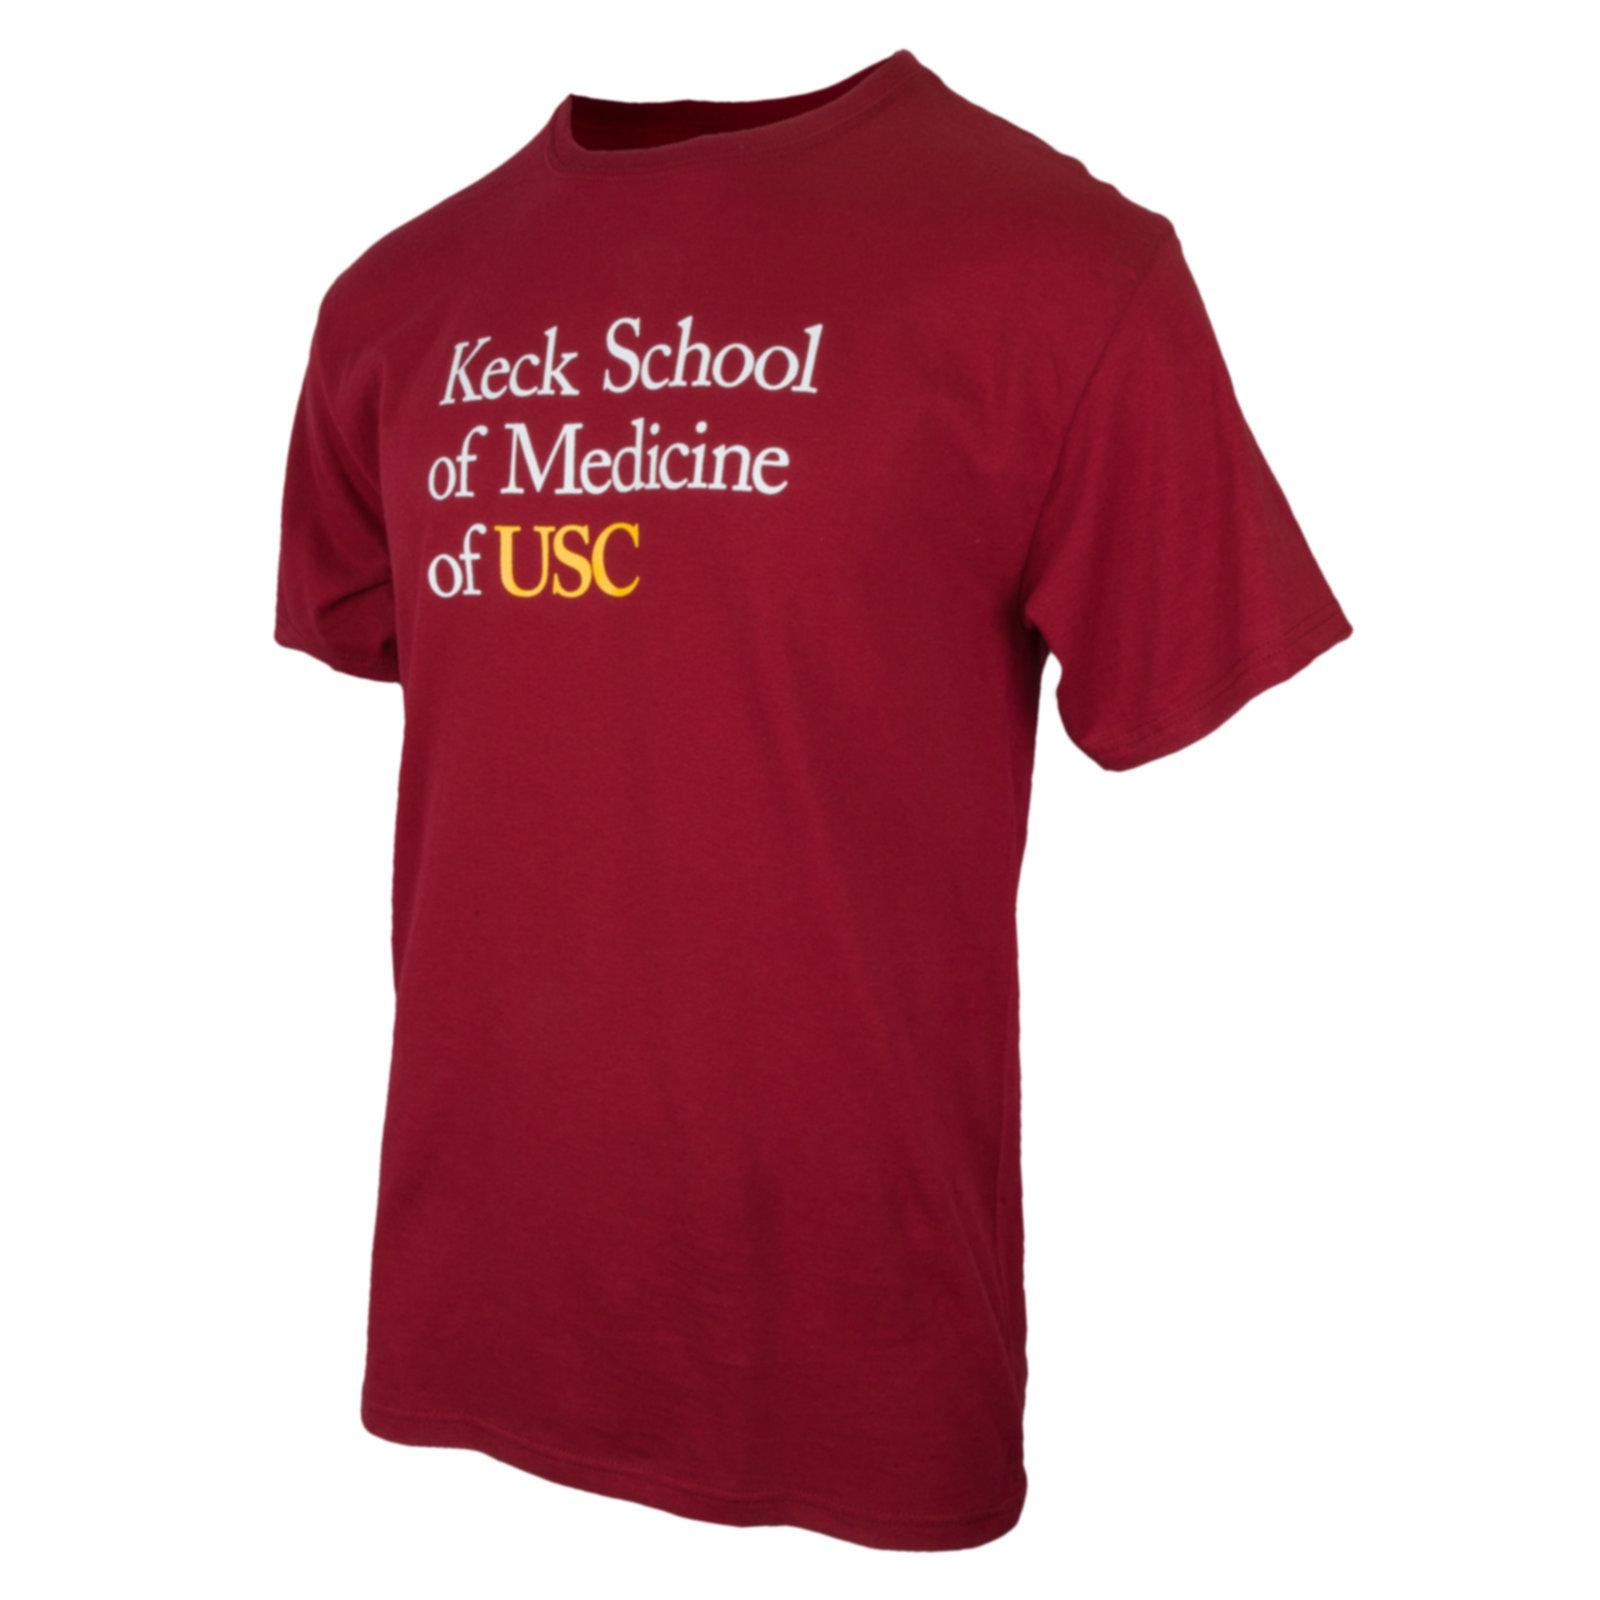 USC School of Keck Medicine SS Tee image01